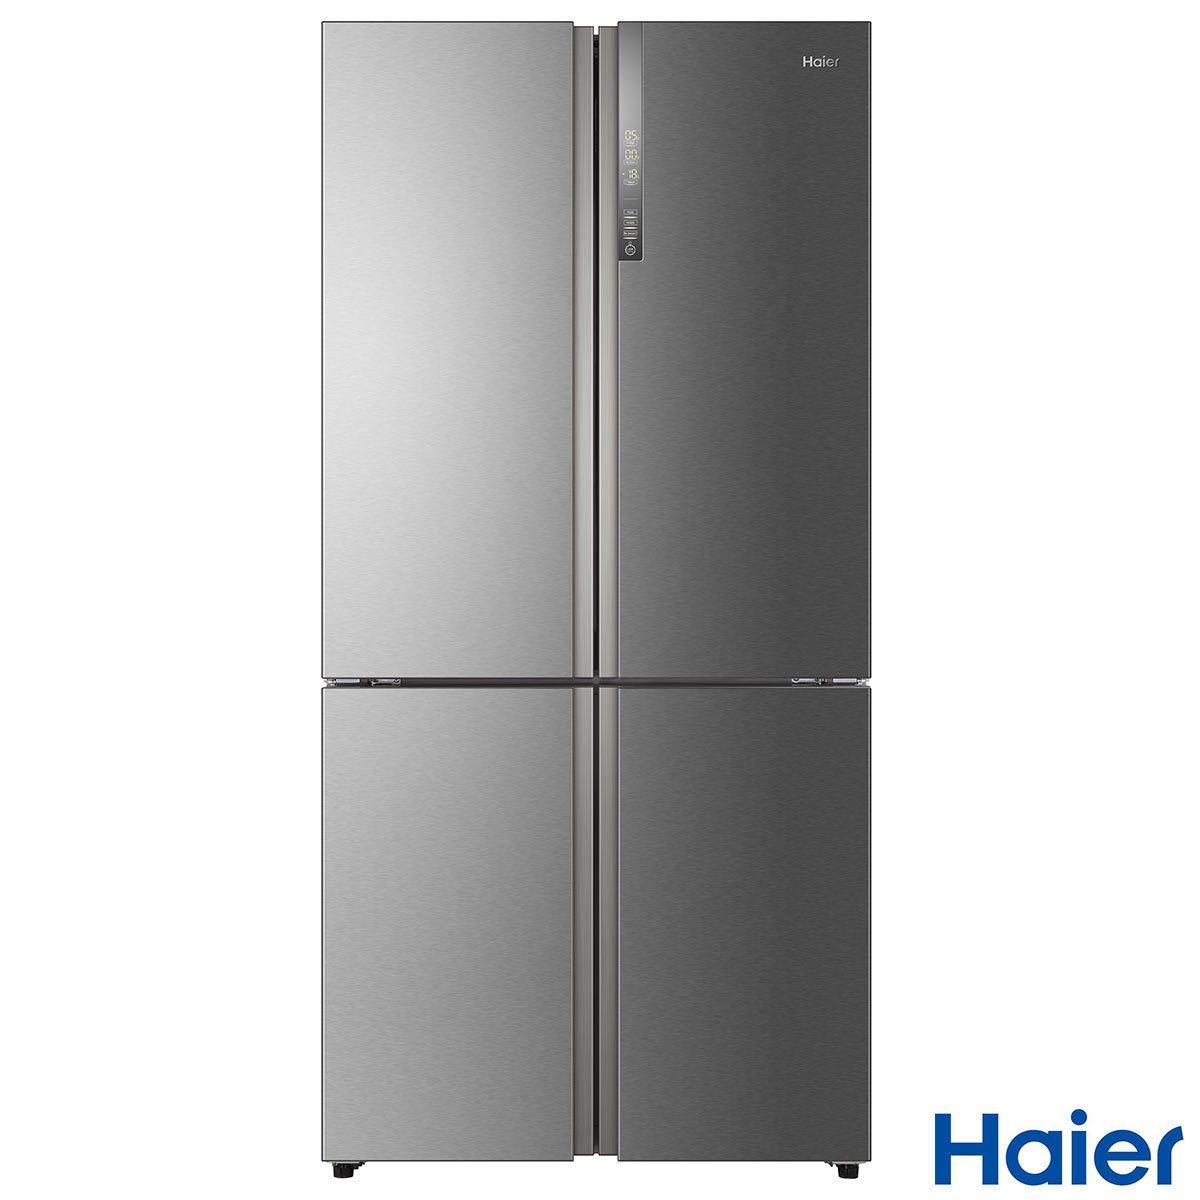 Haier HTF-610DM7, Multidoor Fridge Freezer A++ Rating in Stainless Steel - Signature Retail Stores